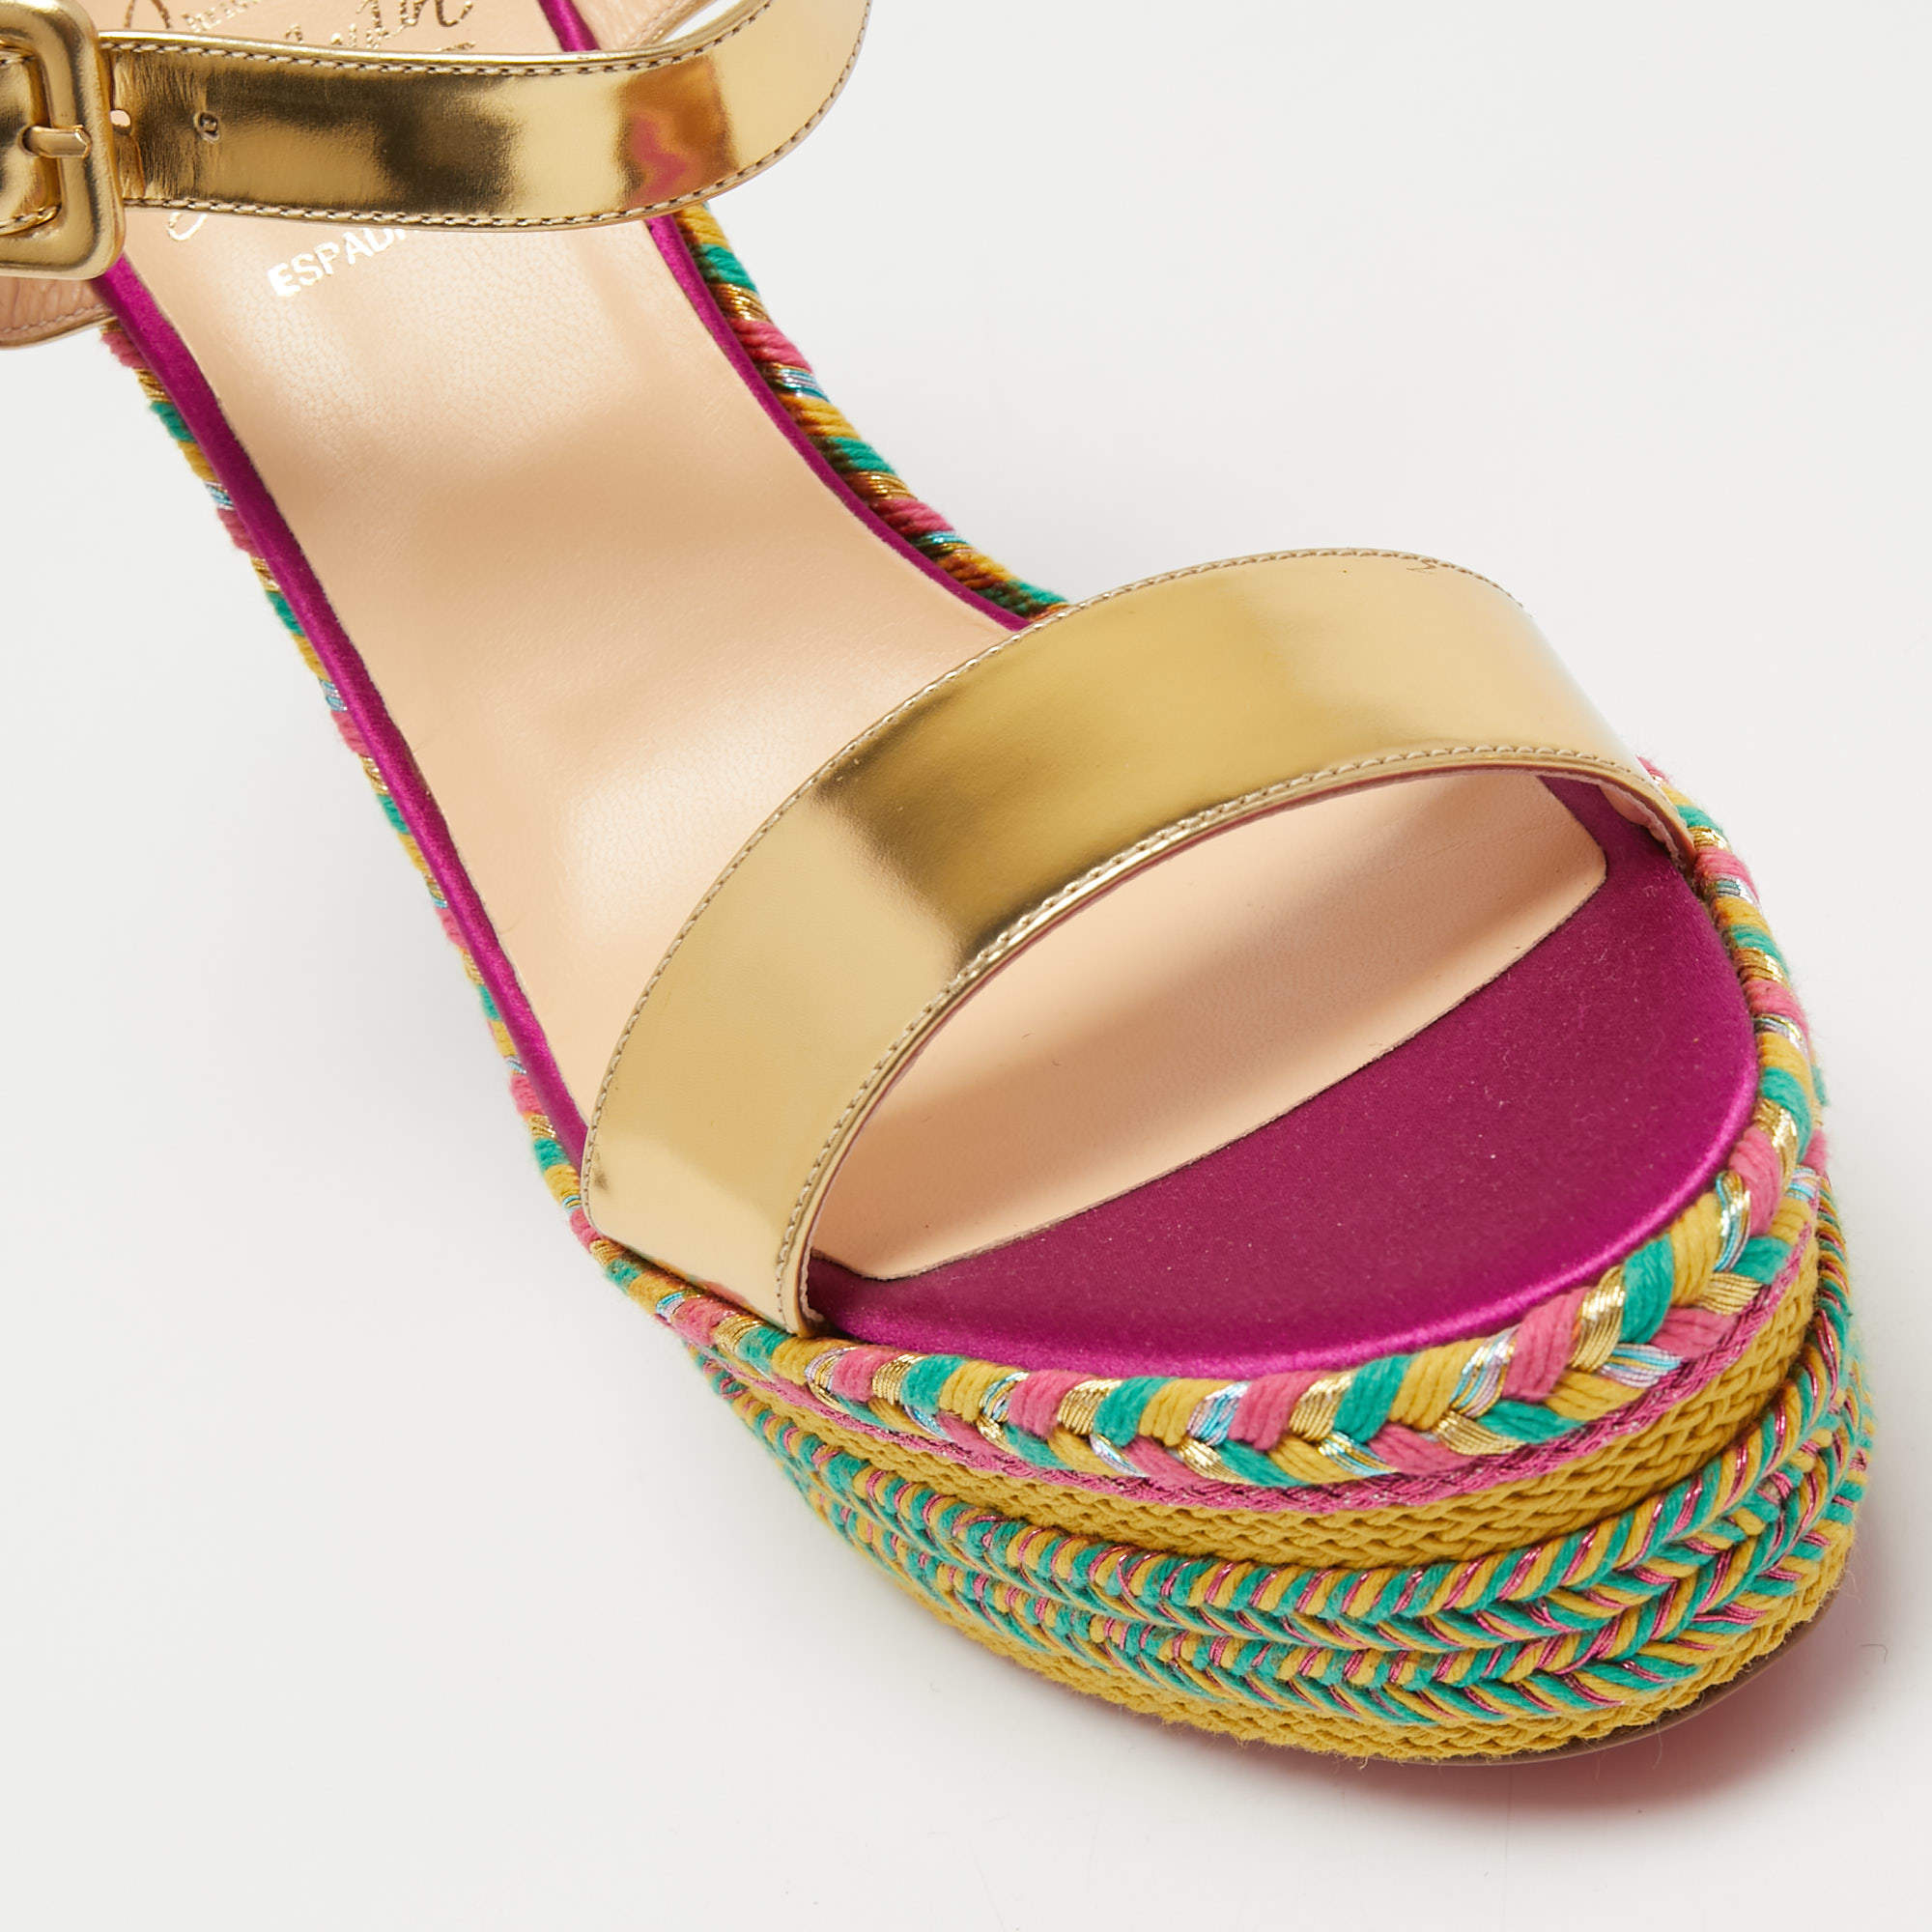 Christian Louboutin Pink Pleated Fabric Espadrille Platform Wedge Sandals  Siz